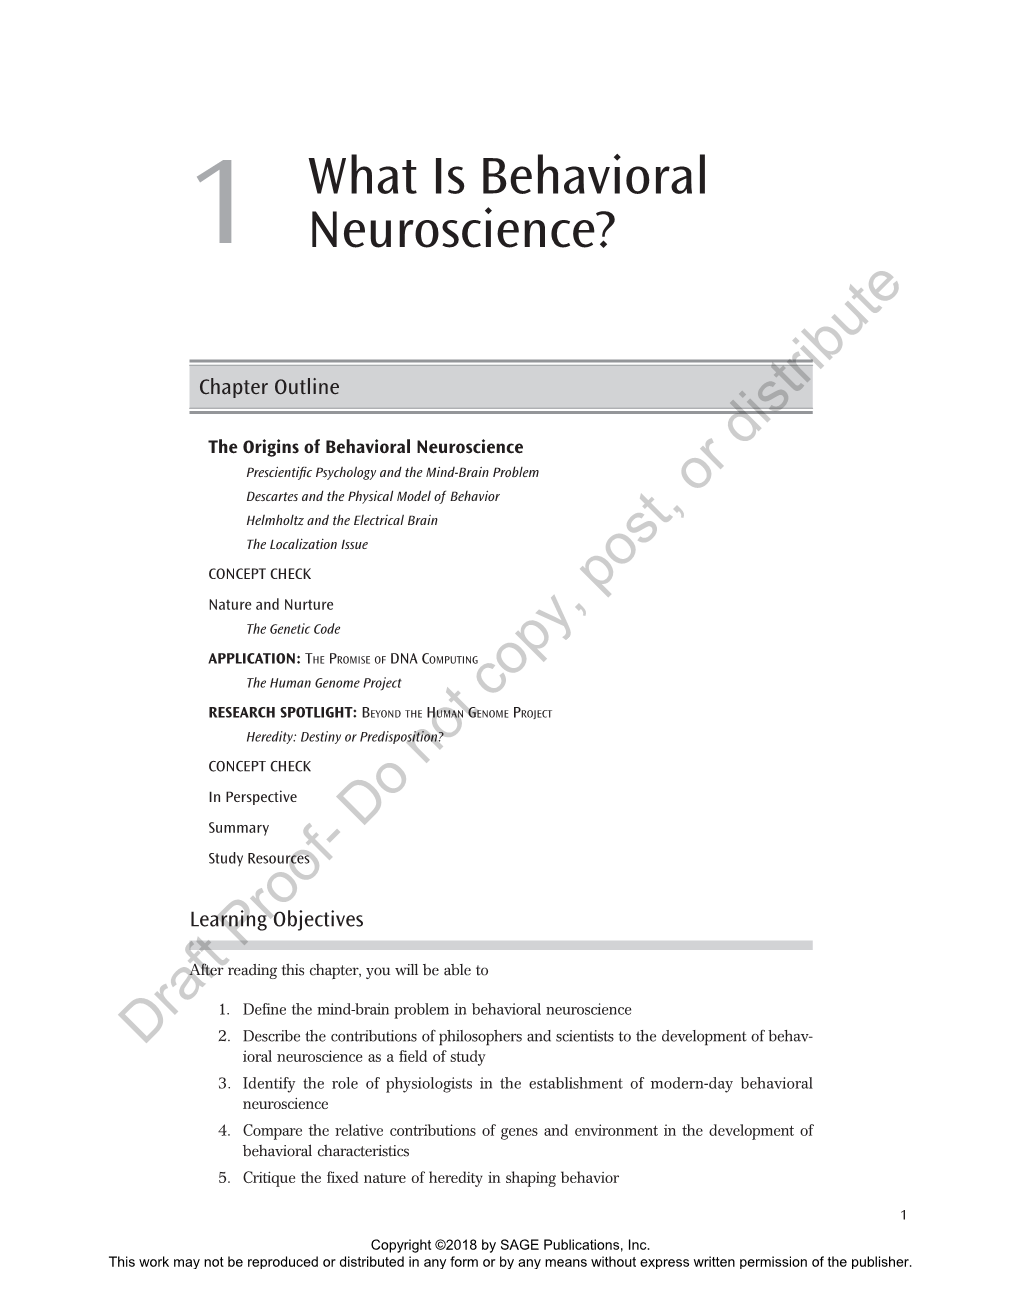 What Is Behavioral Neuroscience? 3